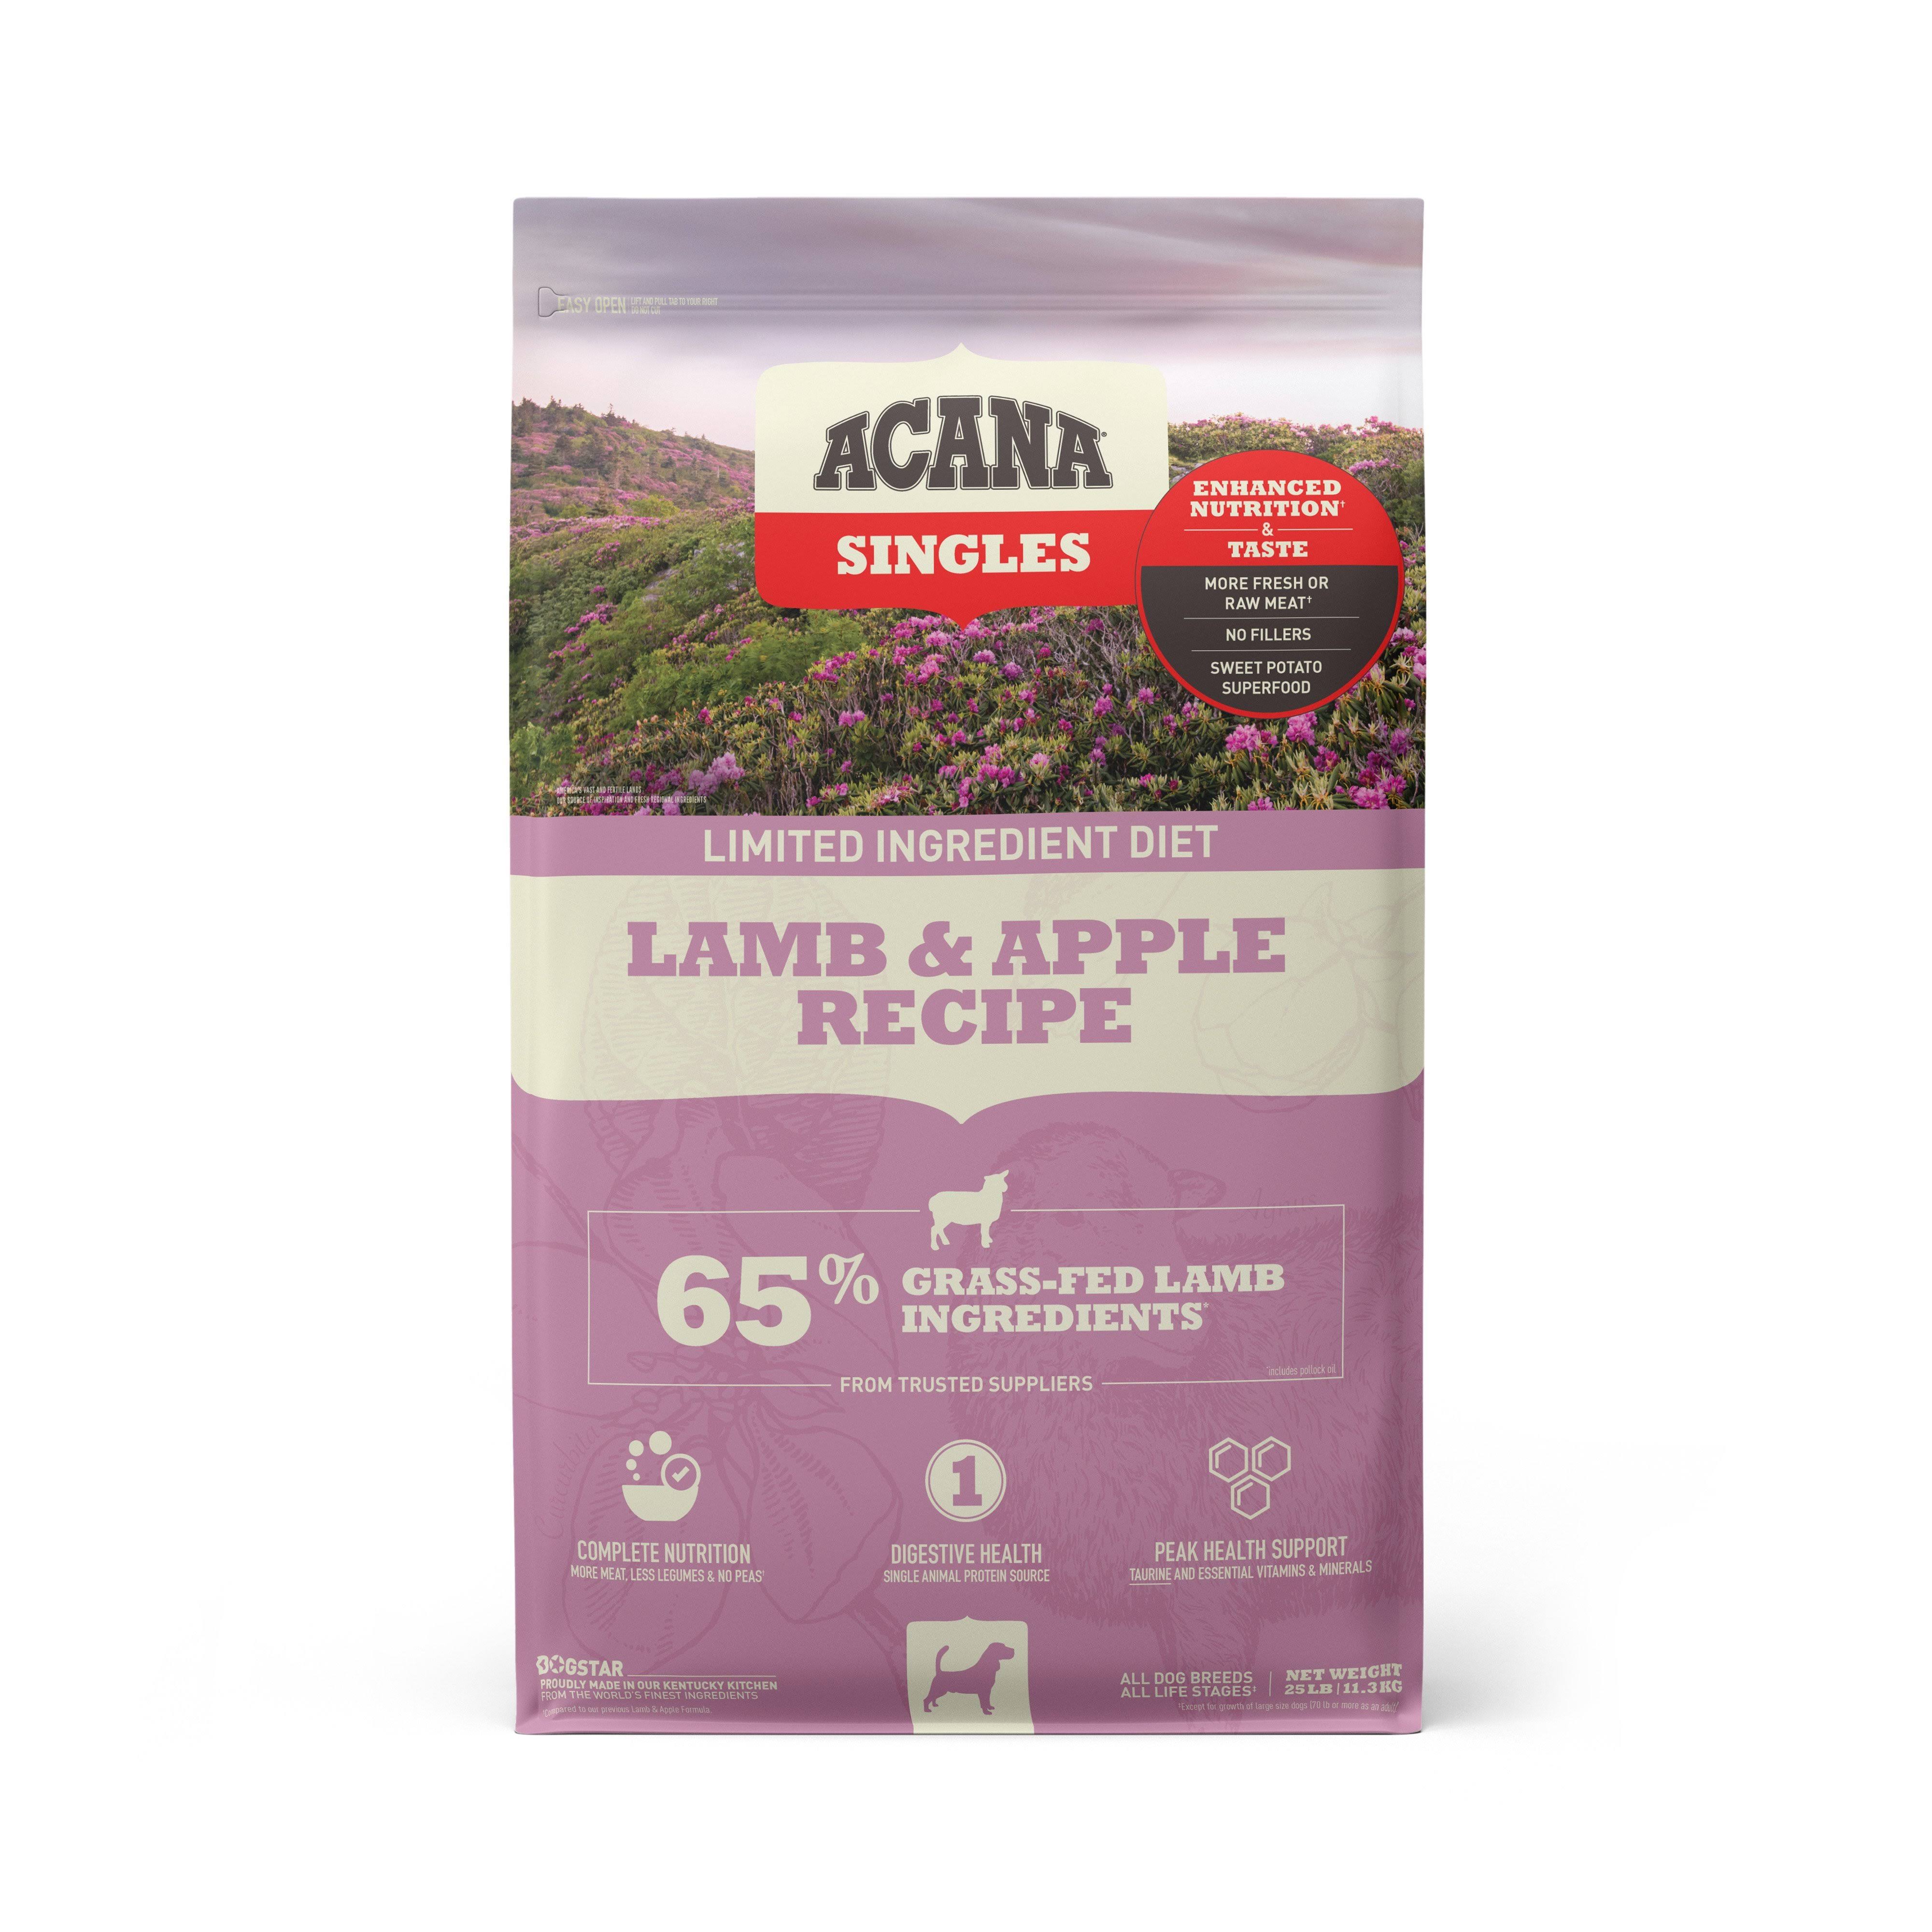 Acana Singles Limited Ingredient Lamb & Apple Recipe Grain-Free Dry Dog Food - 25 lb. Bag